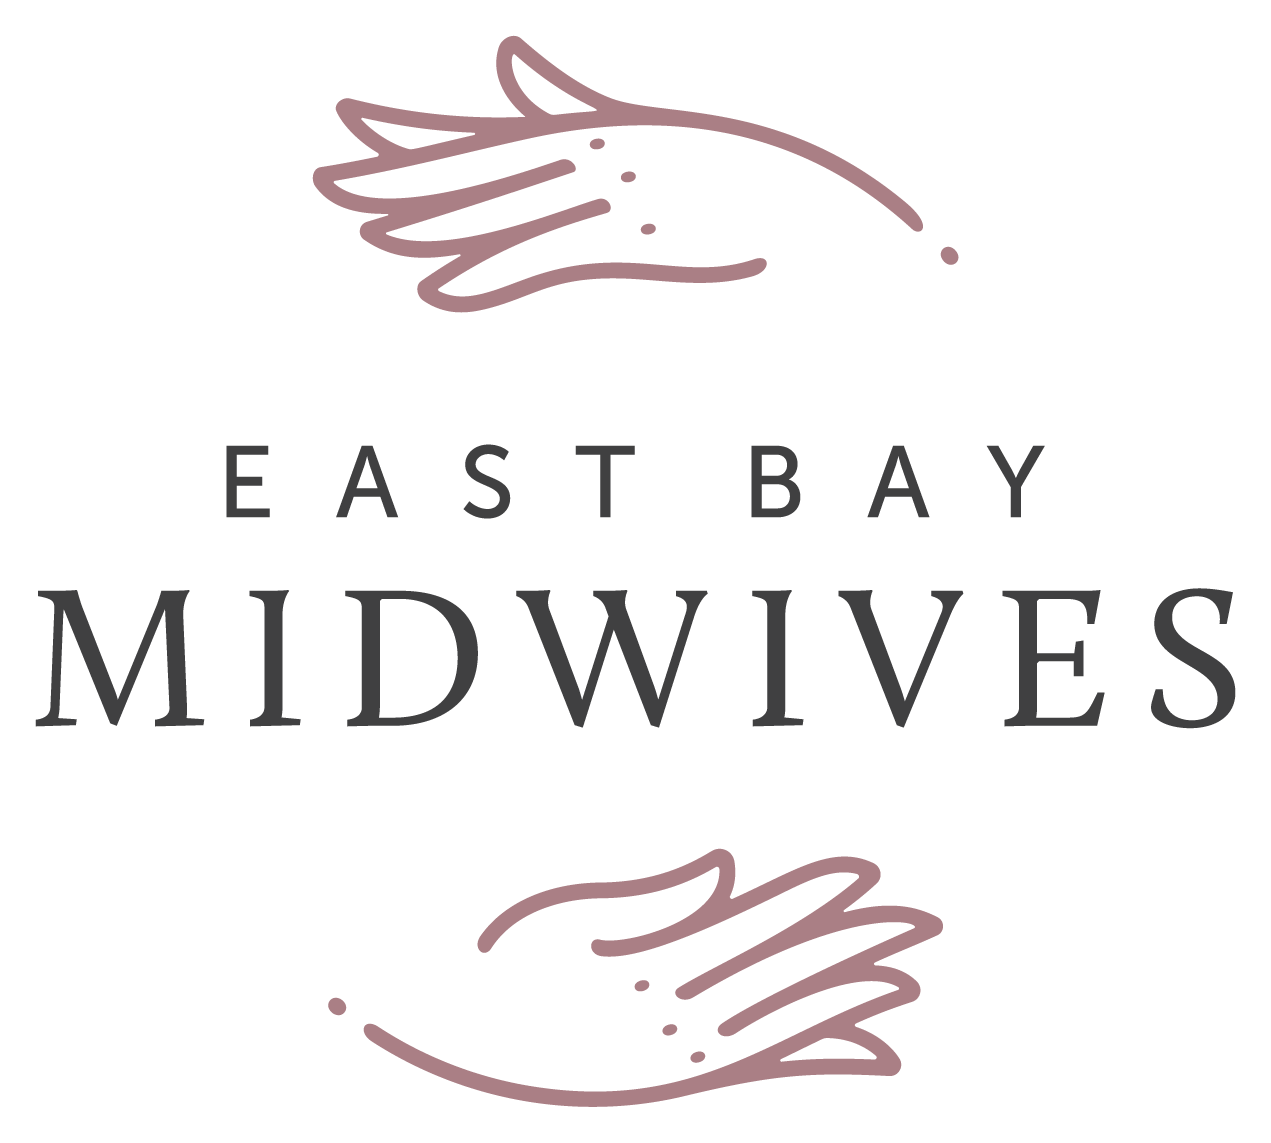 East Bay Midwives - Home Birth | Hospital Birth | Lactation